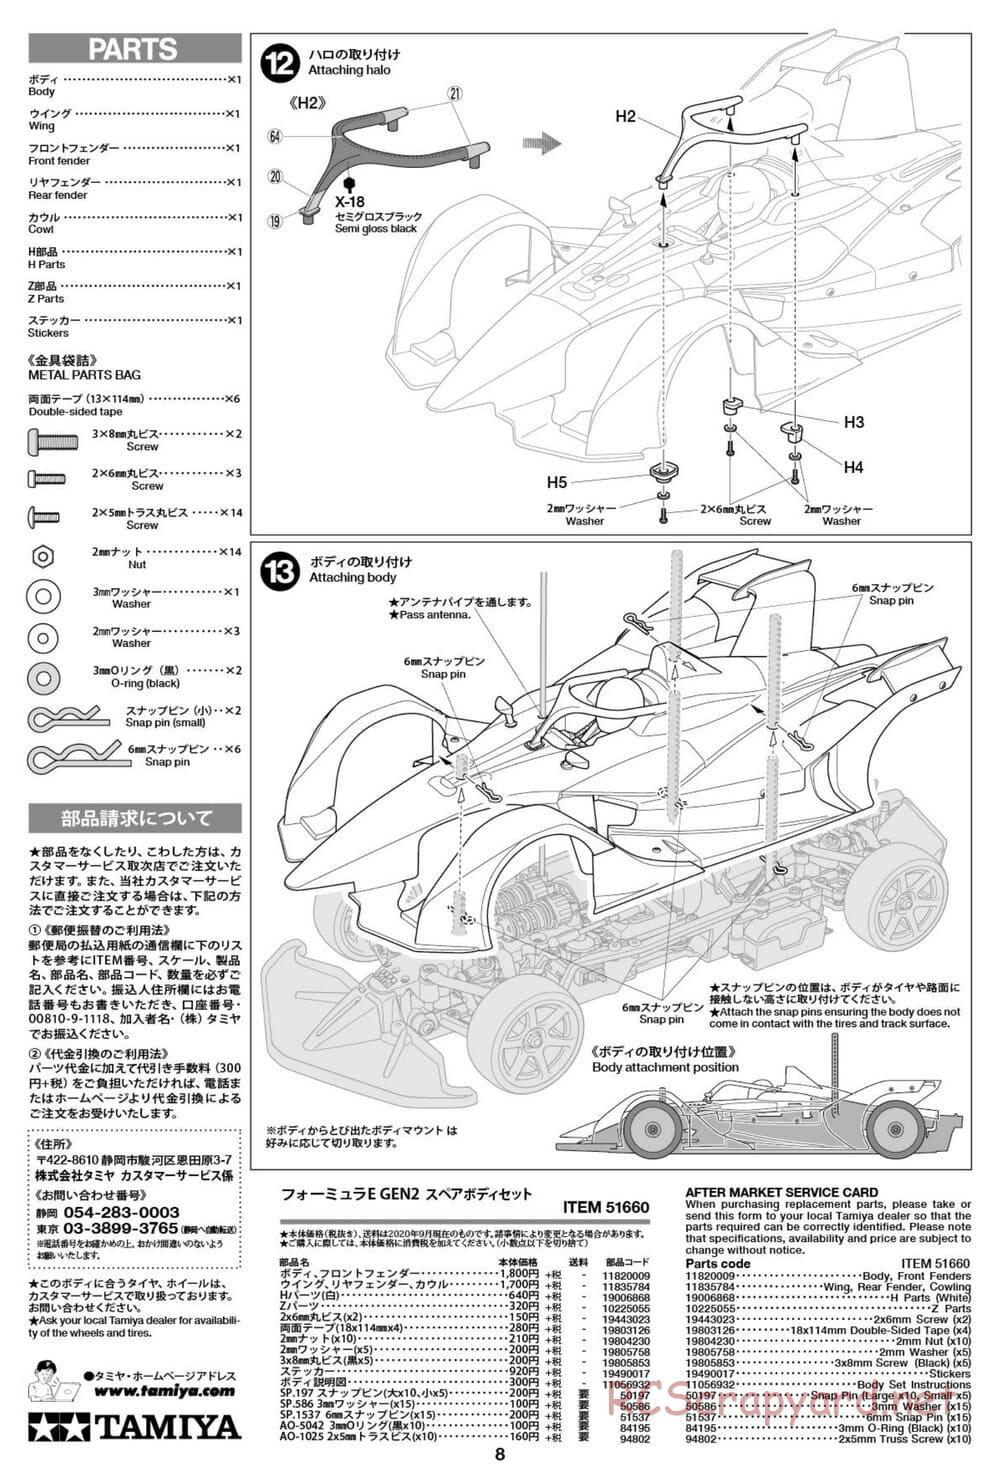 Tamiya - Formula E Gen2 Car - Championship Livery - TC-01 Chassis - Body Manual - Page 8